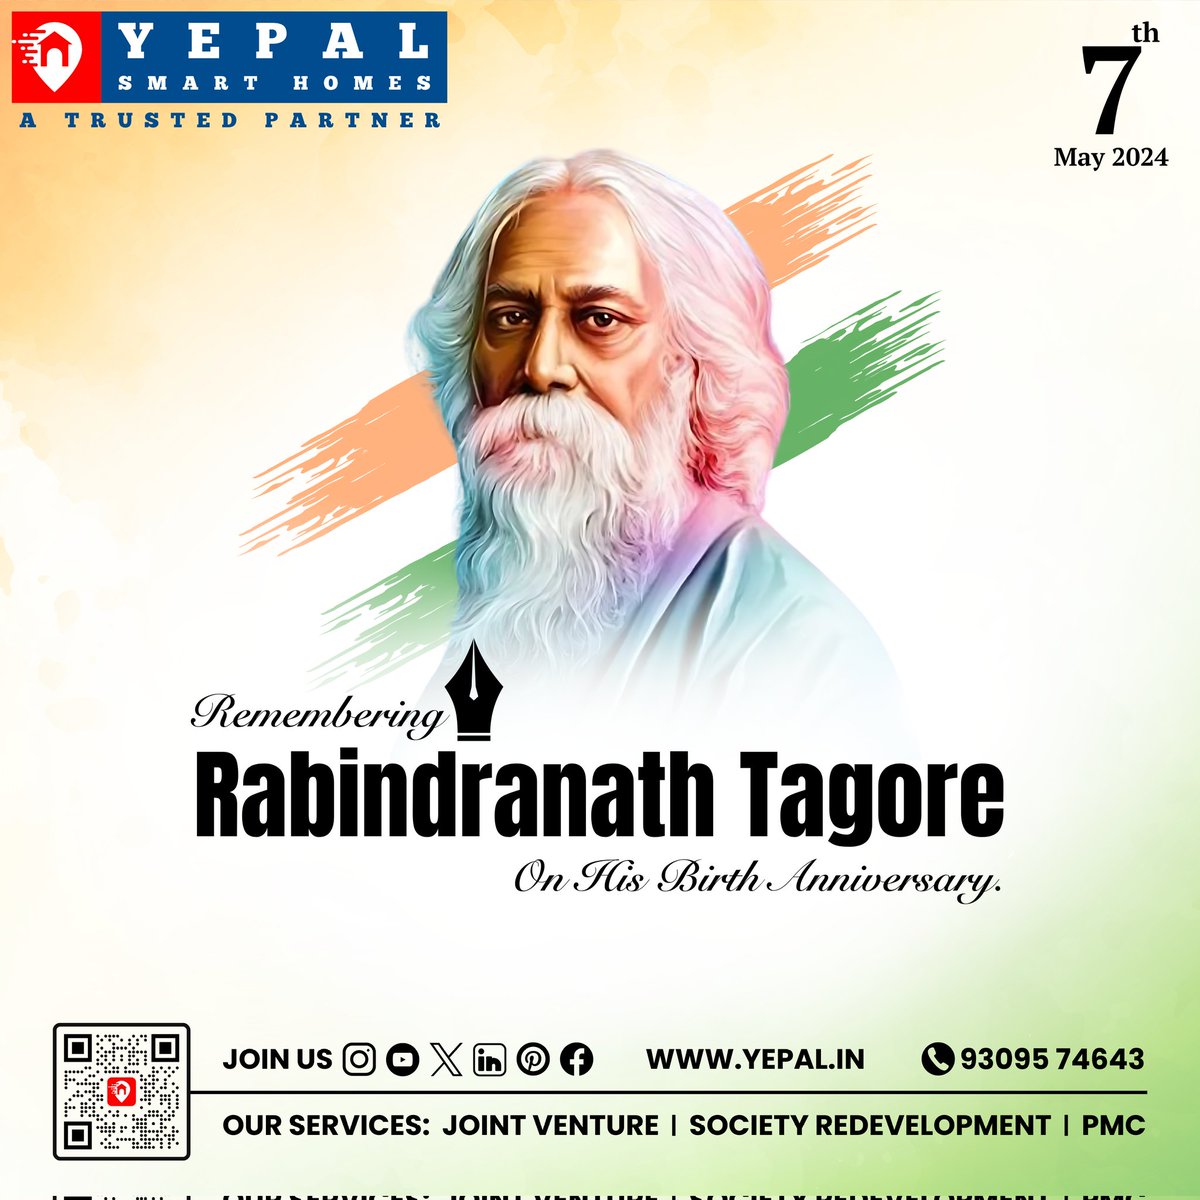 🇮🇳Happy Rabindranath Tagore Birth Anniversary✒️
#RabindranathTagoreJayanti #RabindranathTagore
#yepalsmarthomes #yepalhousingdeveloper #yepalsocietyredevelopment #yepalconstruction #smarthome  #punepropertyportal #trustedbuilders #Trusteddeveloper #realestatedeveloper  #pune